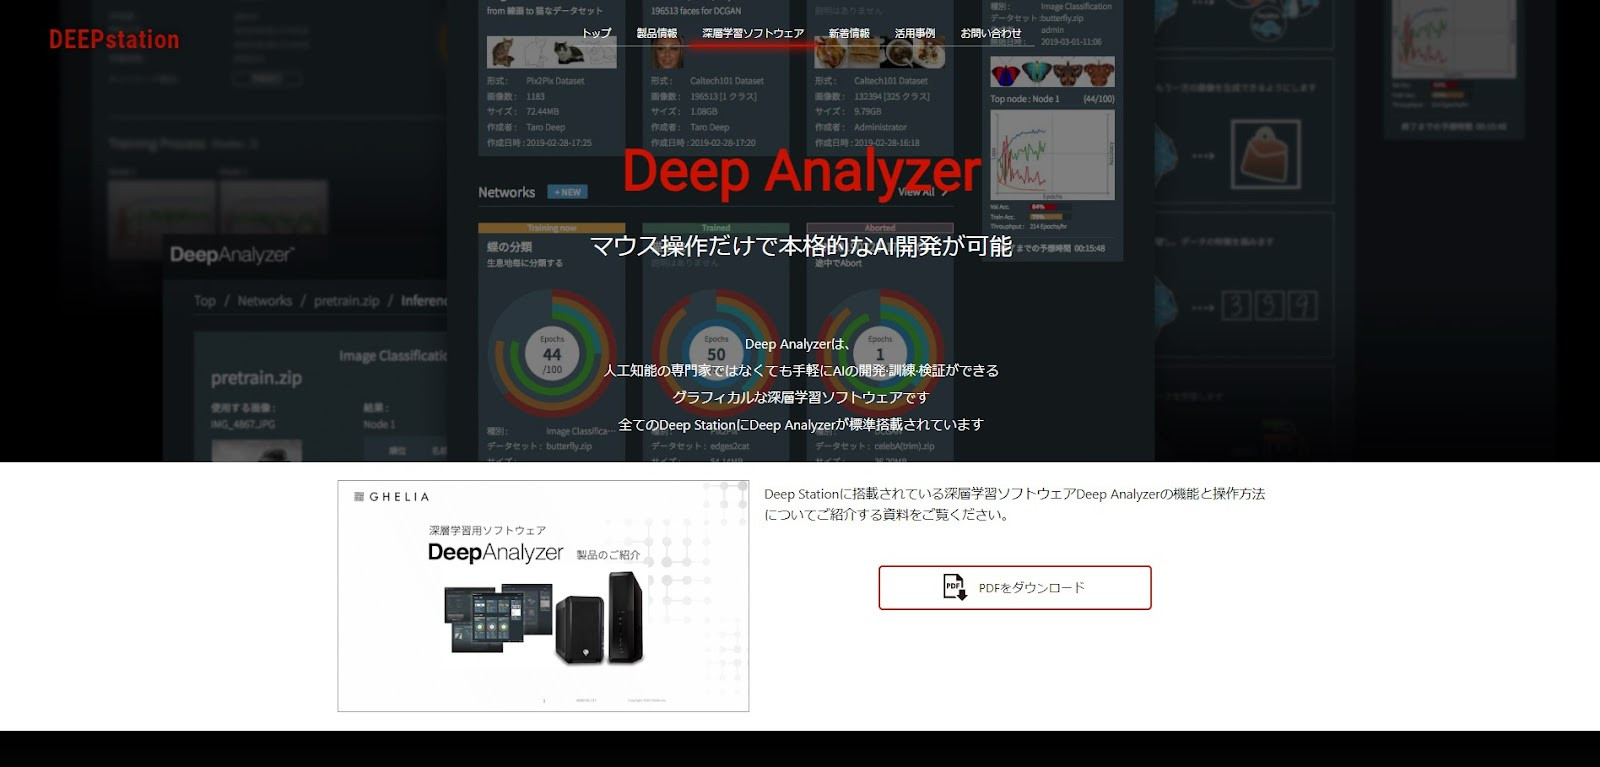 DEEPstation / Deep Analyzer